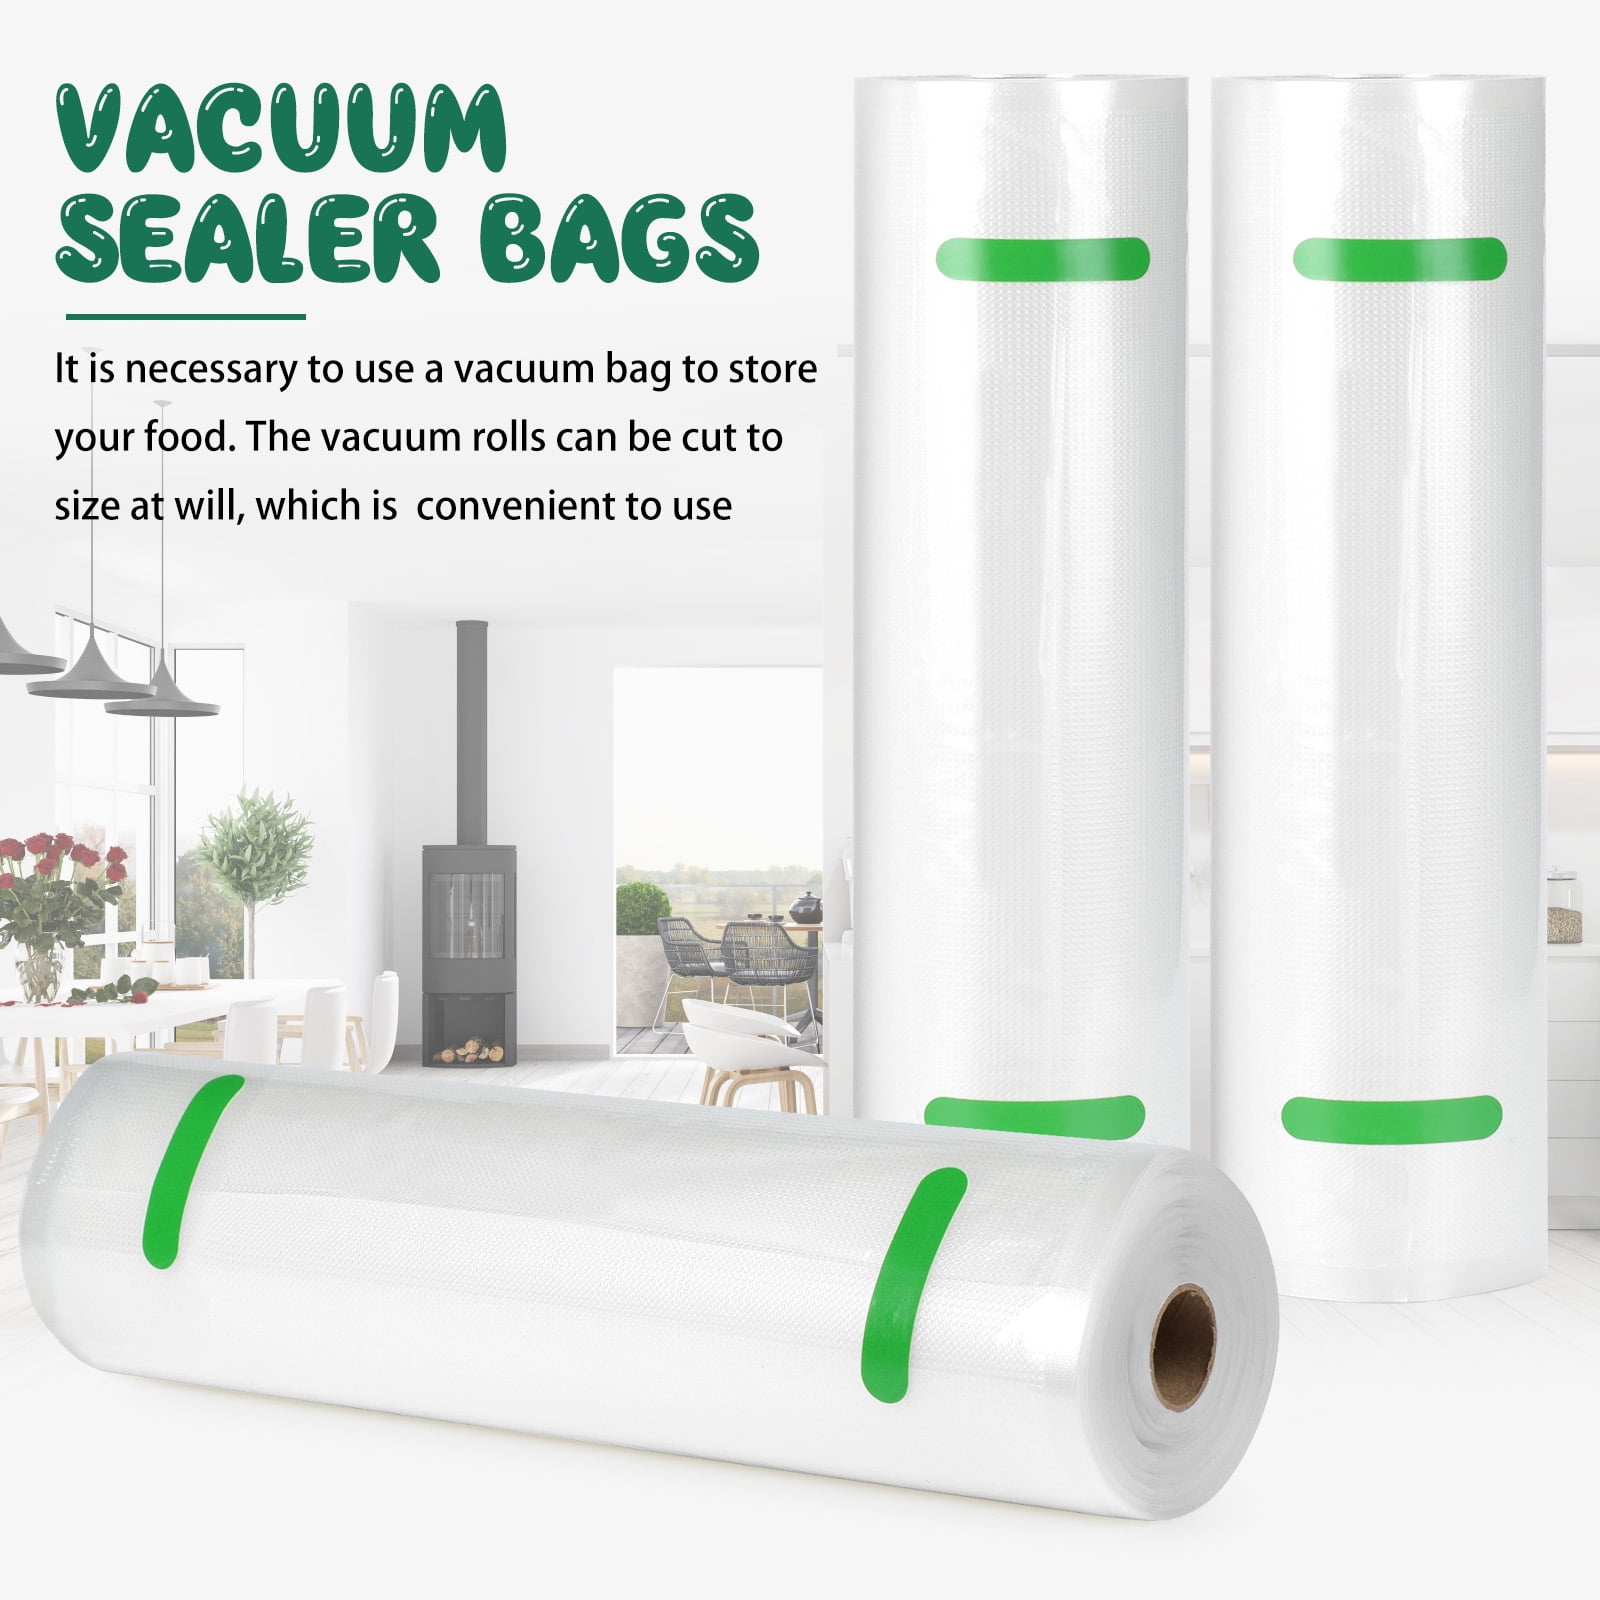 Boxlegend vacuum Sealer Bags 11 x 25' Rolls 4 Pack for Foodsaver, Sea –  BoxLegend